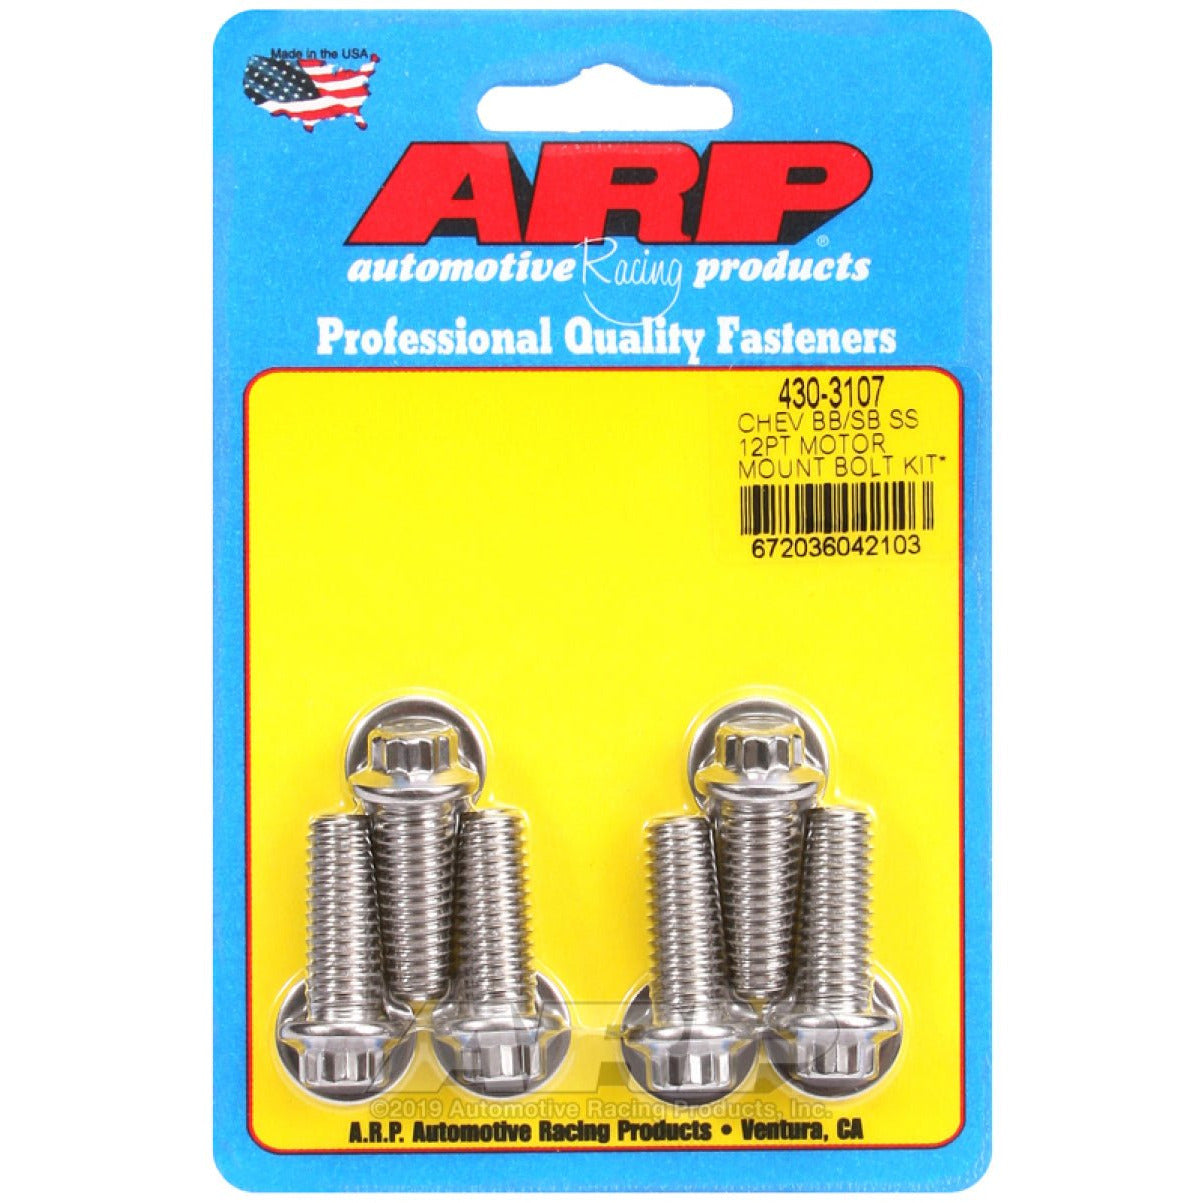 ARP Chevy 12pt Motor Mount Bolt Kit w/ energy suspension Mounts ARP Hardware Kits - Other